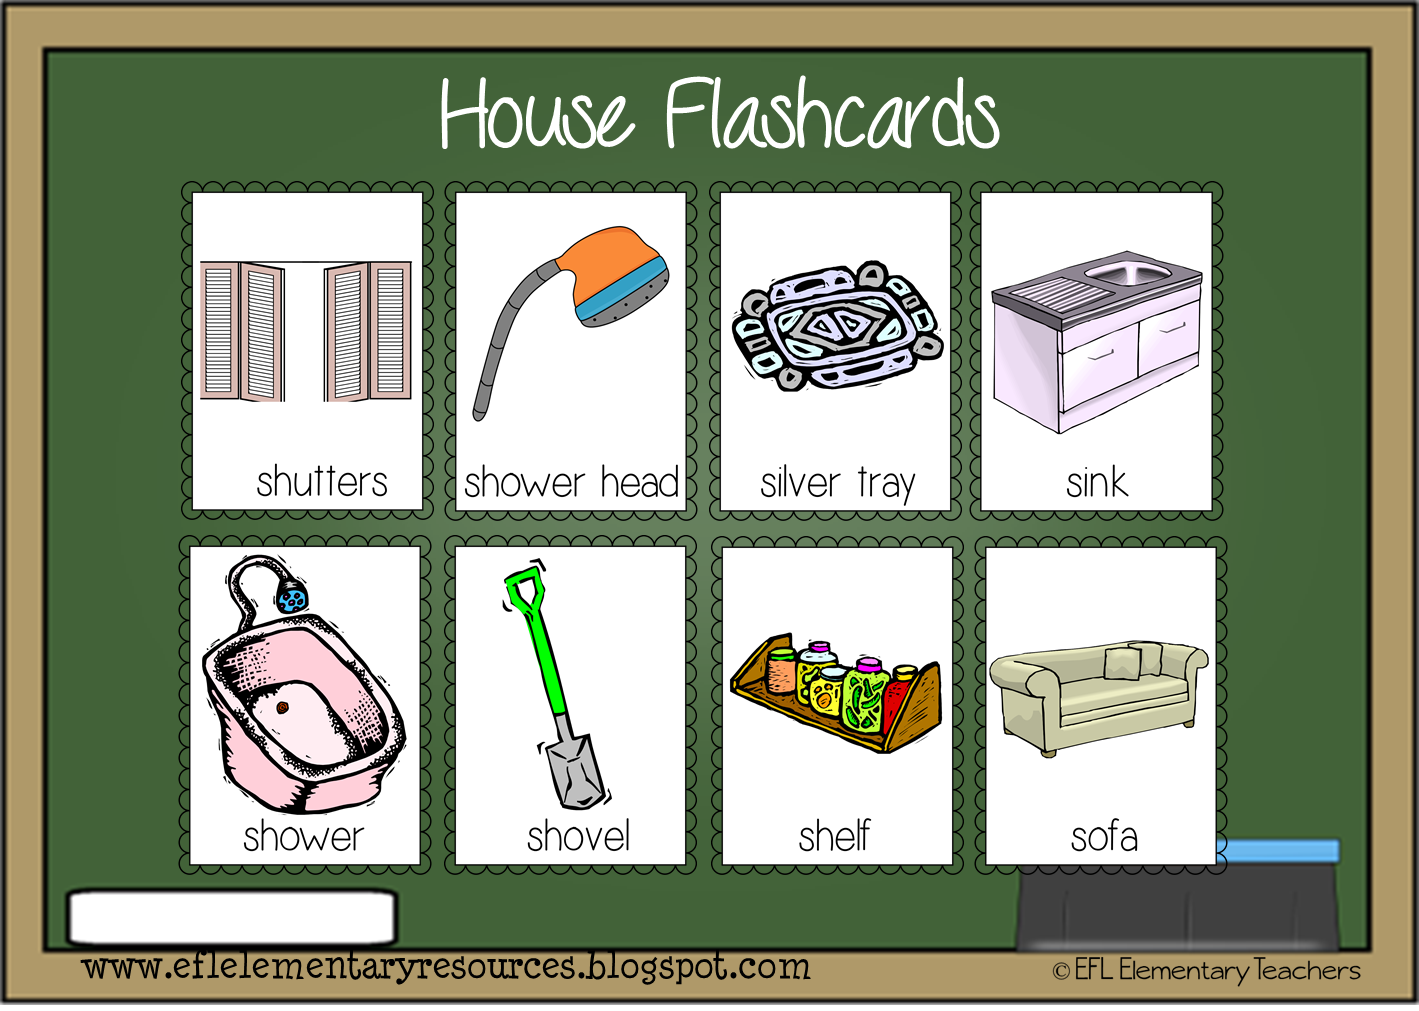 House Stuff flashcards